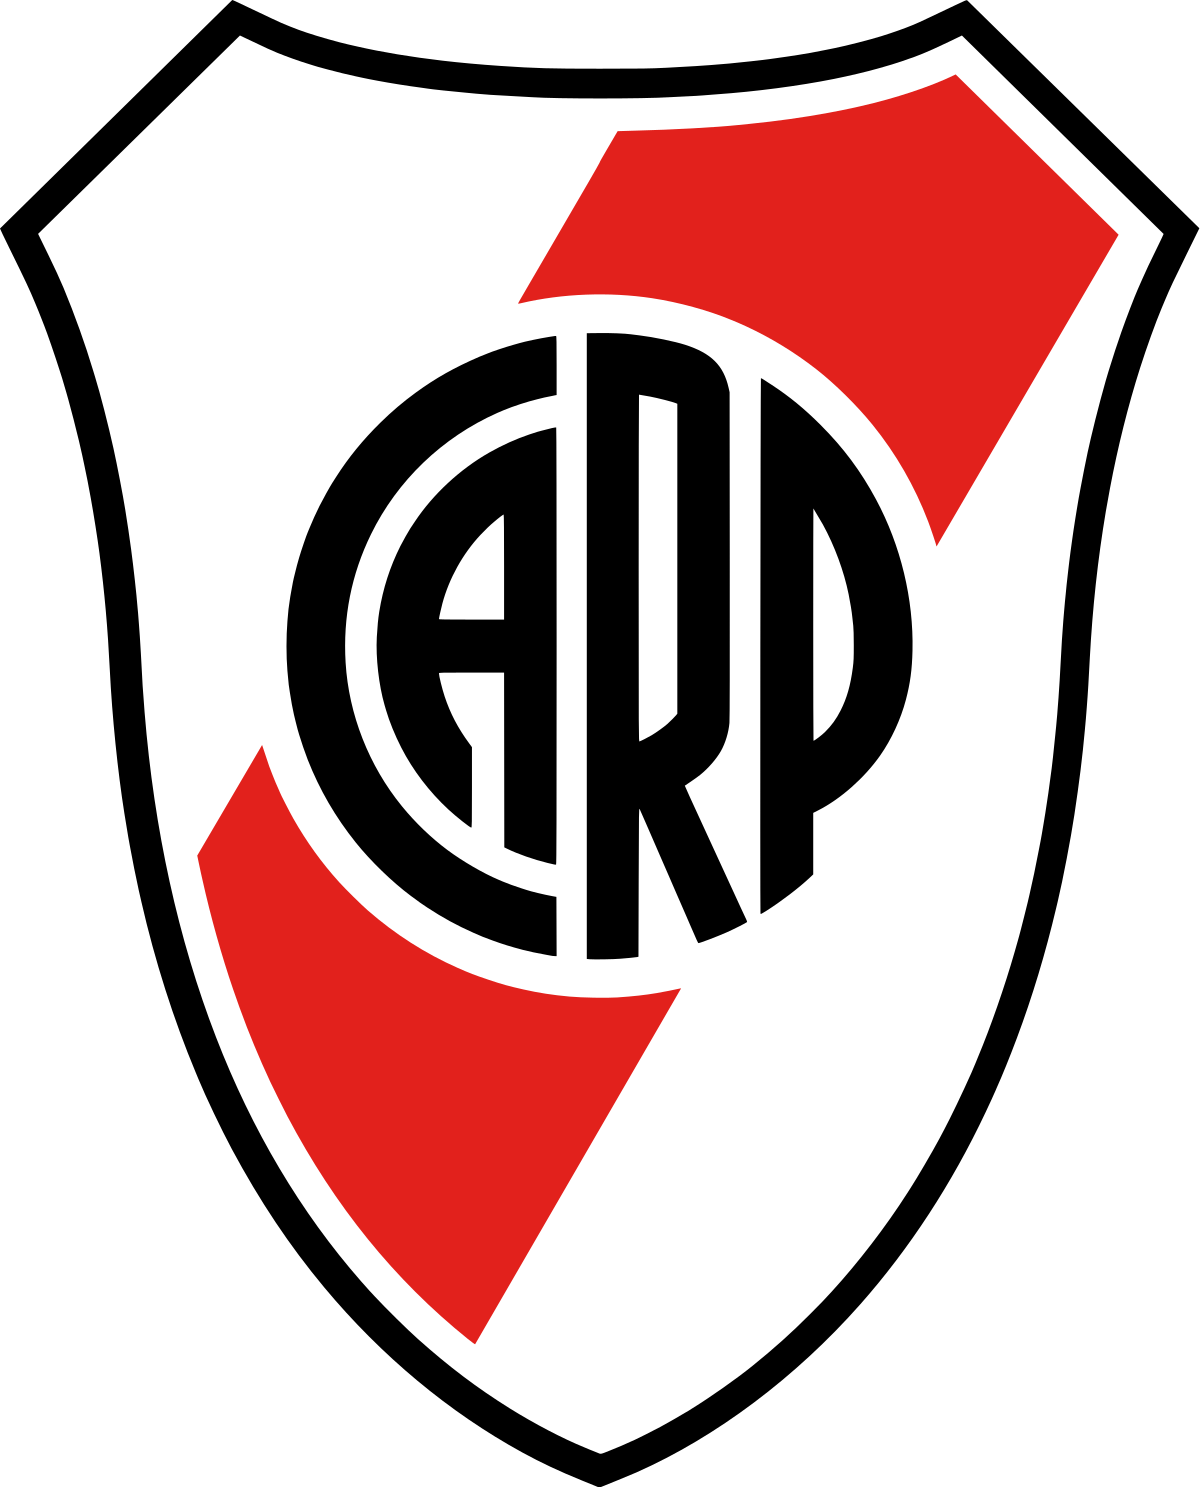 Club Atlético Banfield - Wikipedia